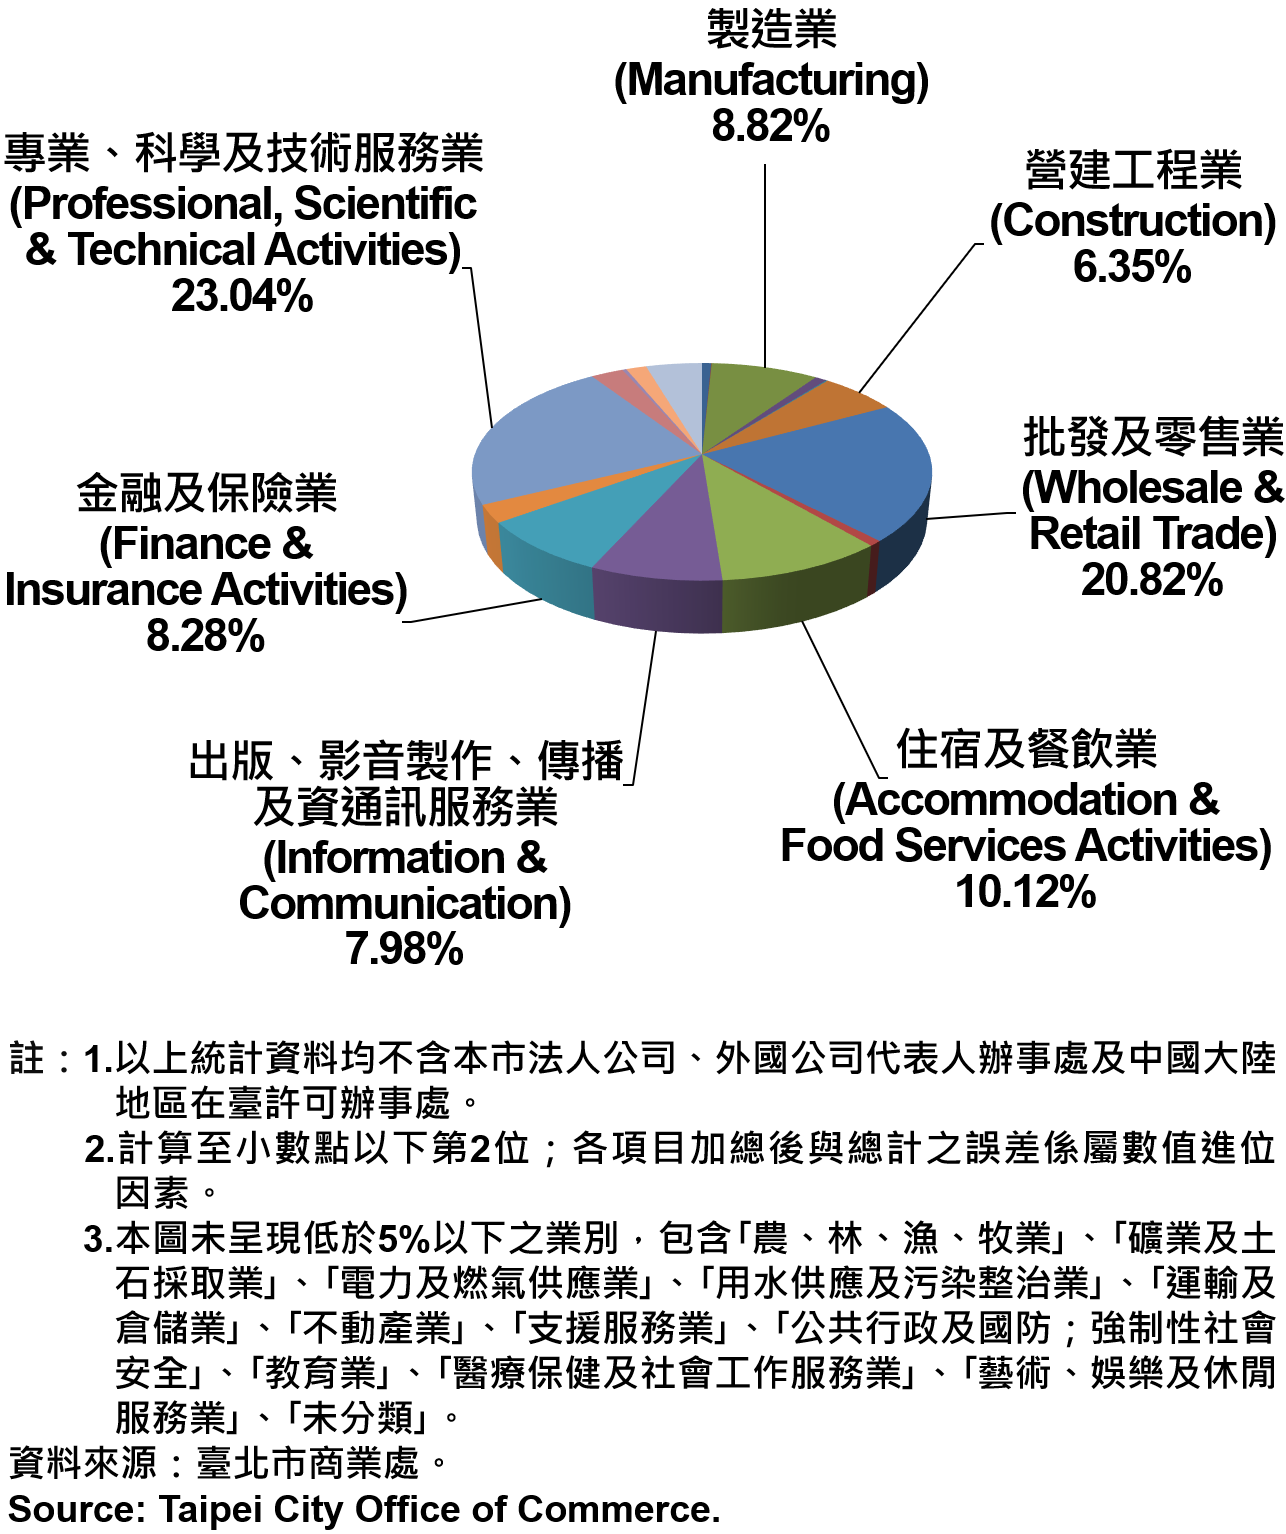 臺北市新創公司行號之業別分布情形—依新增家數—2020Q2 Newly Registered Companies in Taipei City by Industry- Number of Incorporation—2020Q2